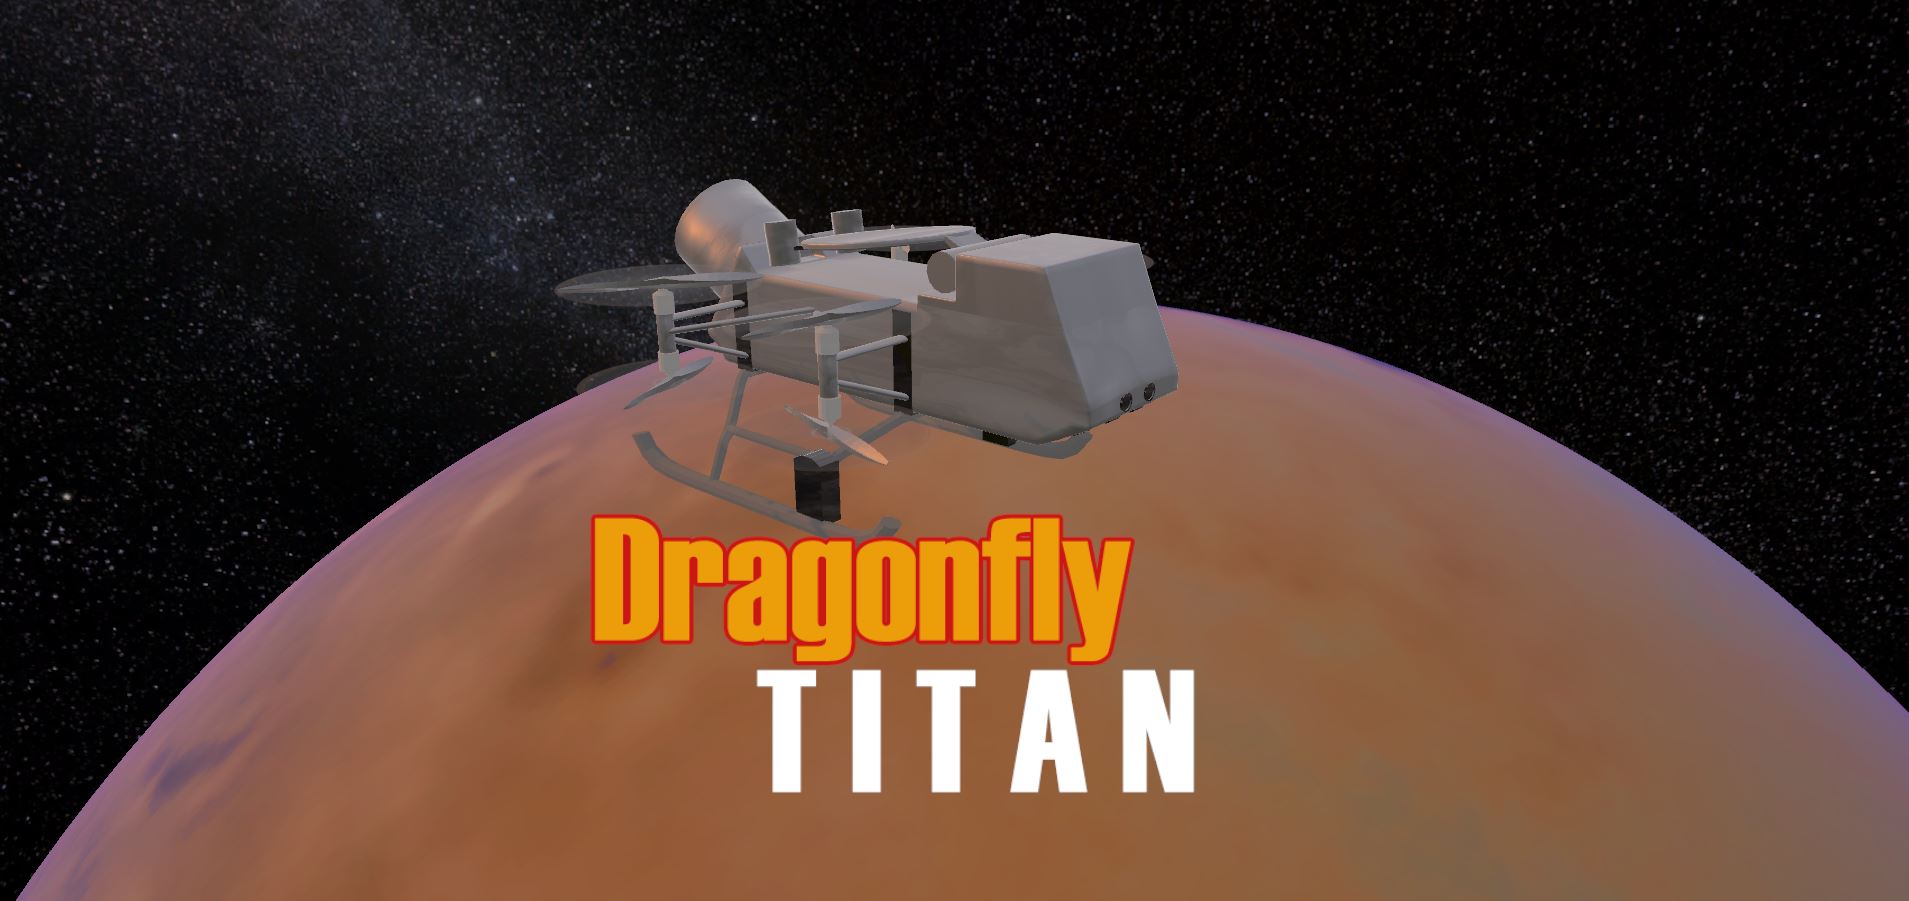 Dragonfly TITAN image